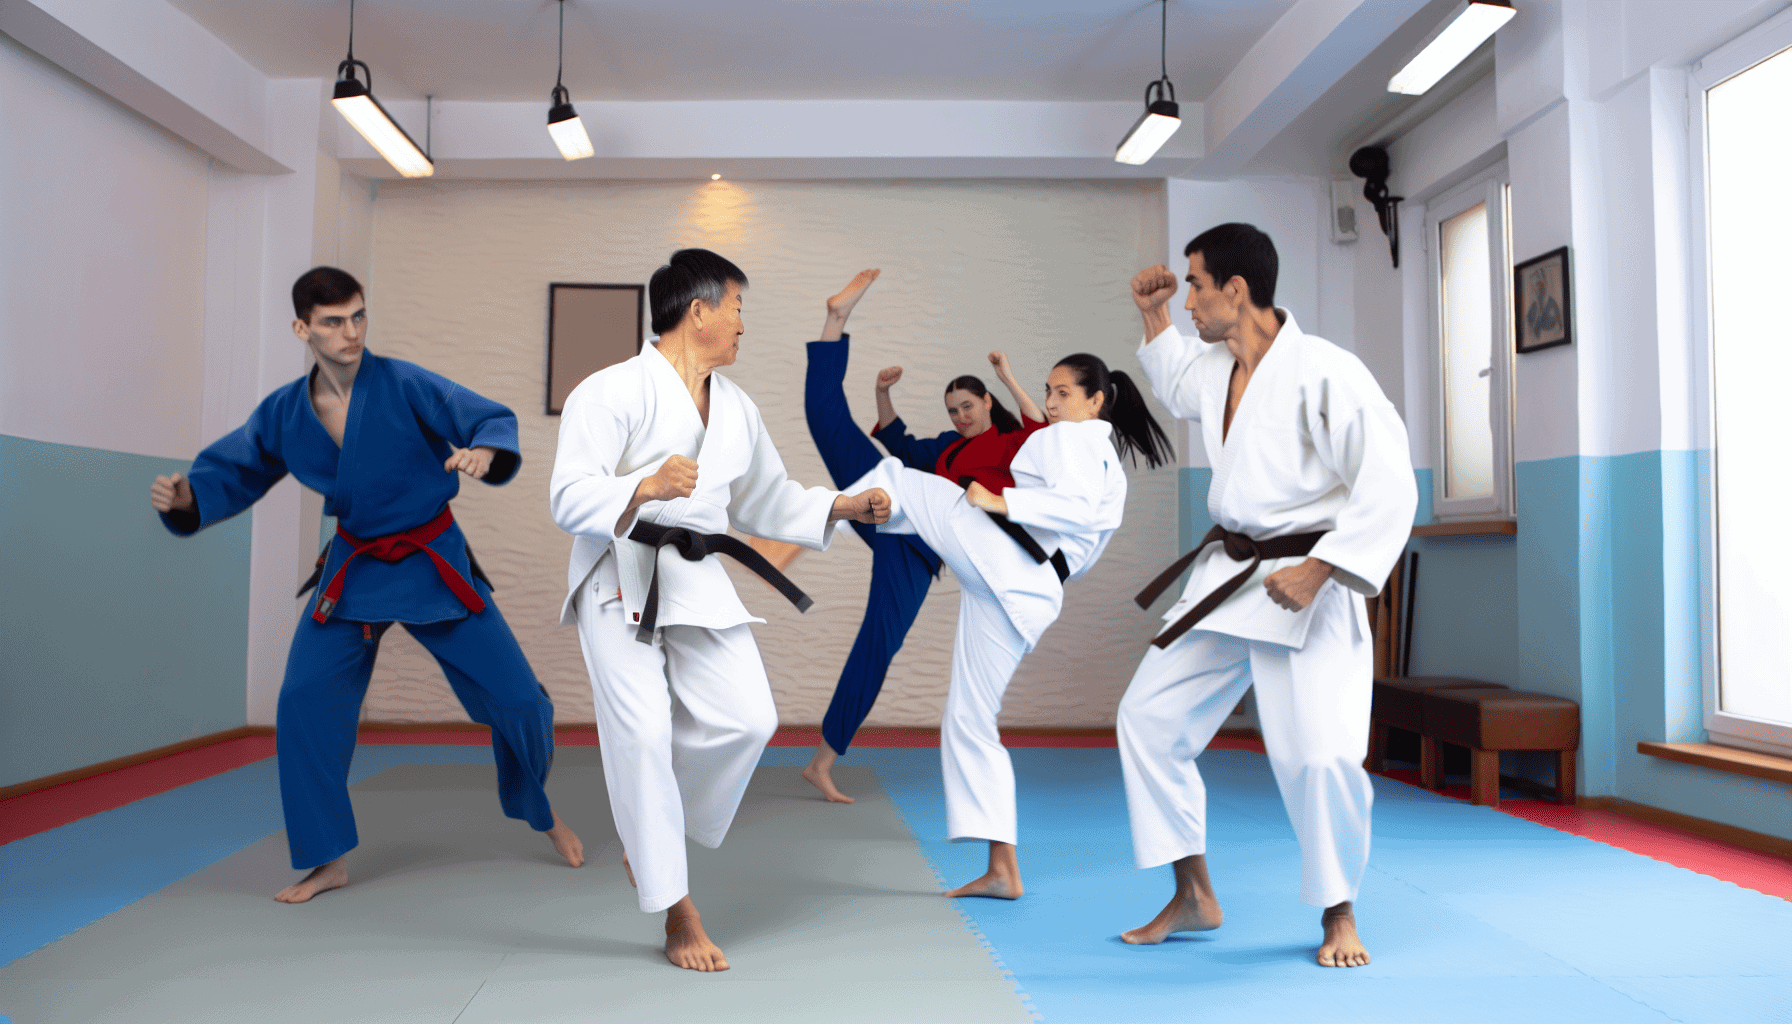 Various traditional martial arts disciplines